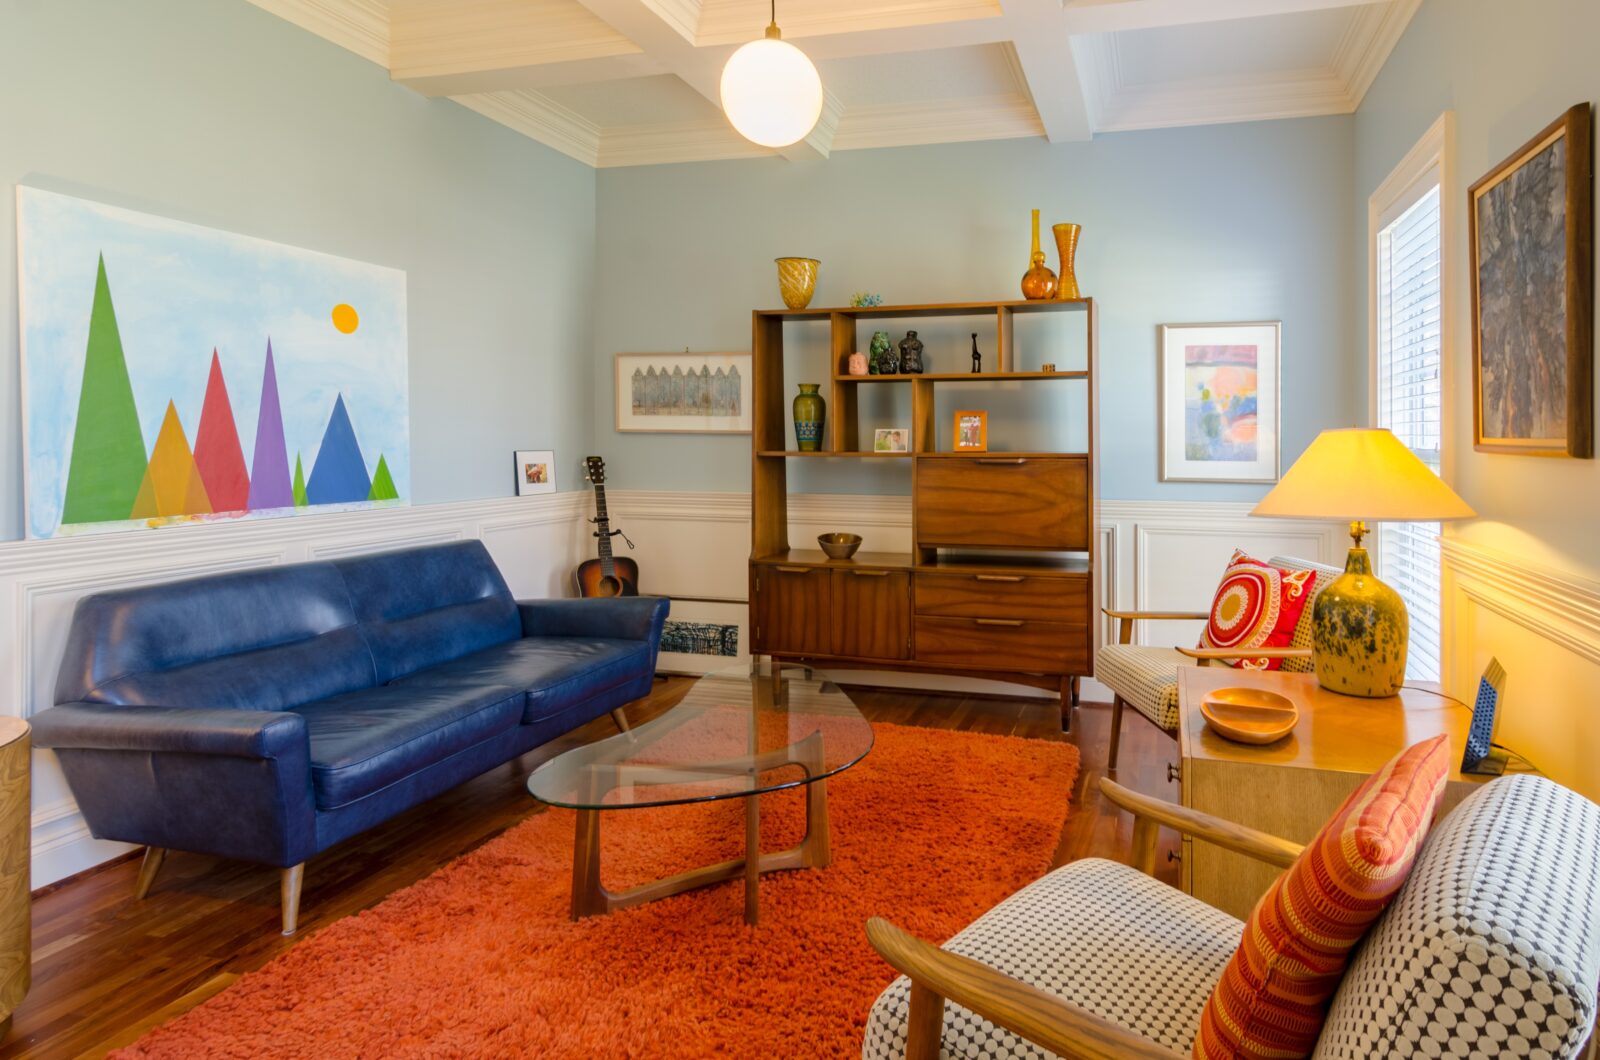 60s style home interior